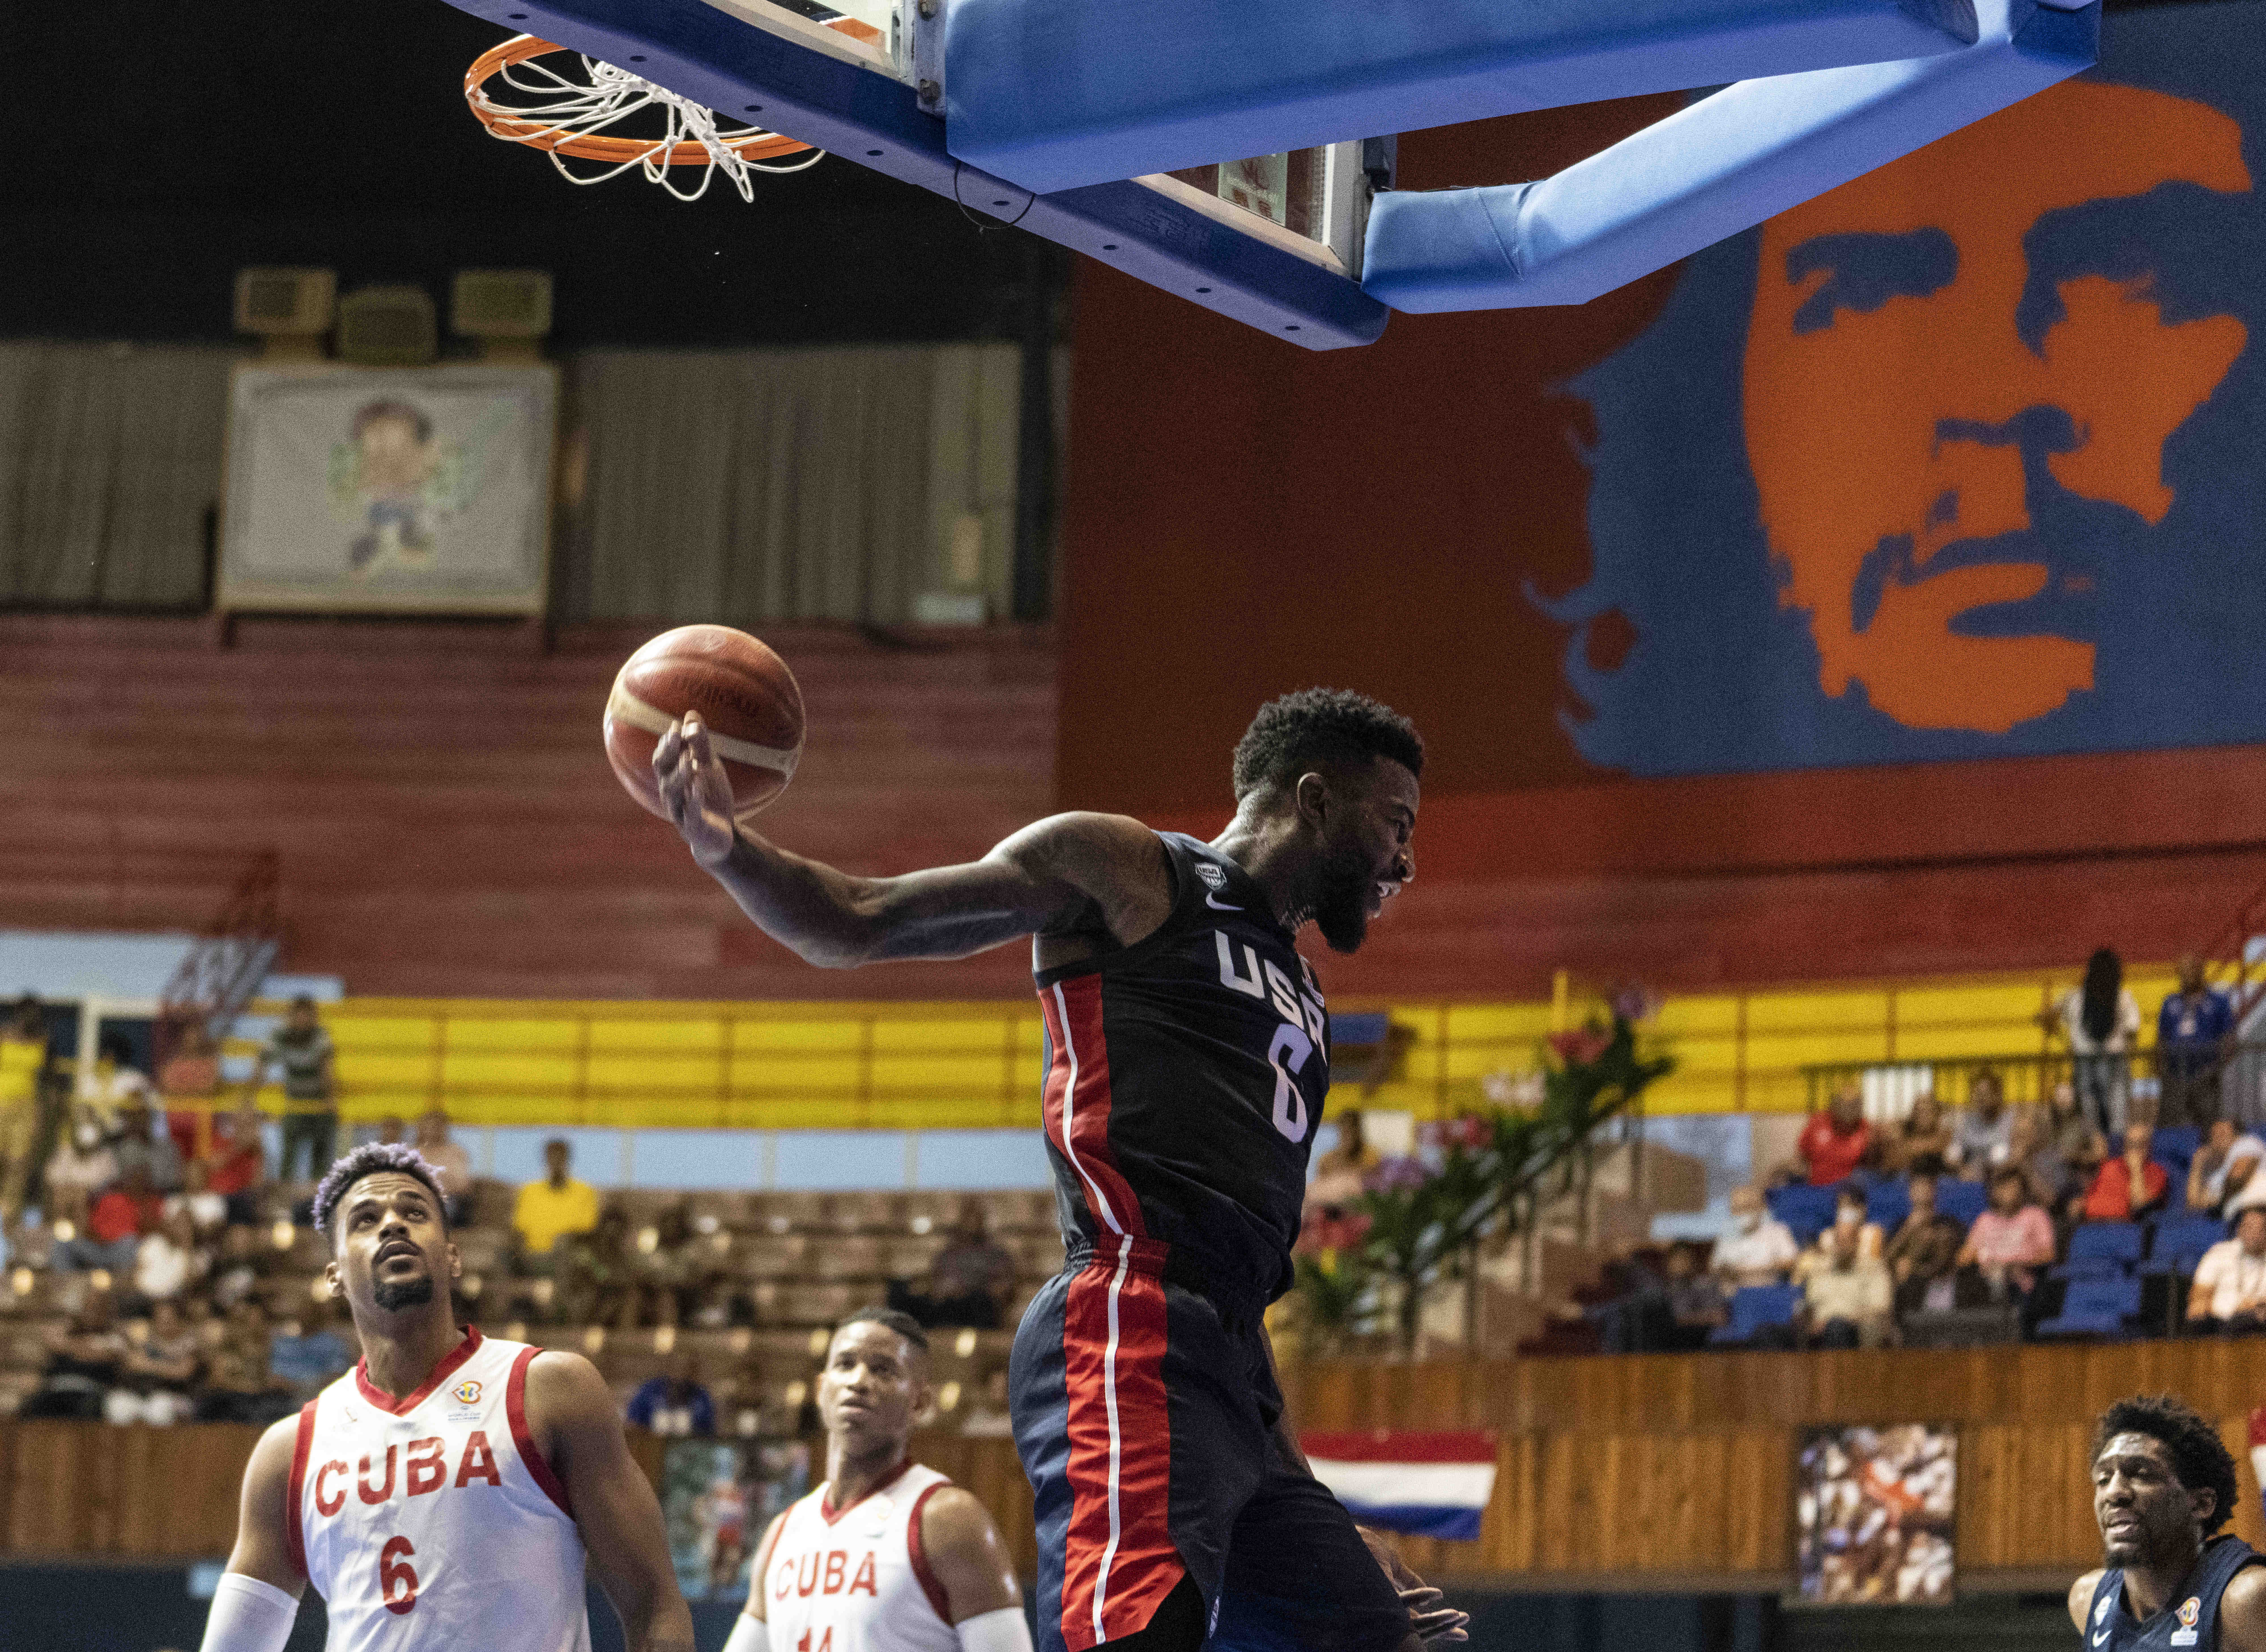 A win on the 4th: USA Basketball pulls away, tops Cuba 87-64